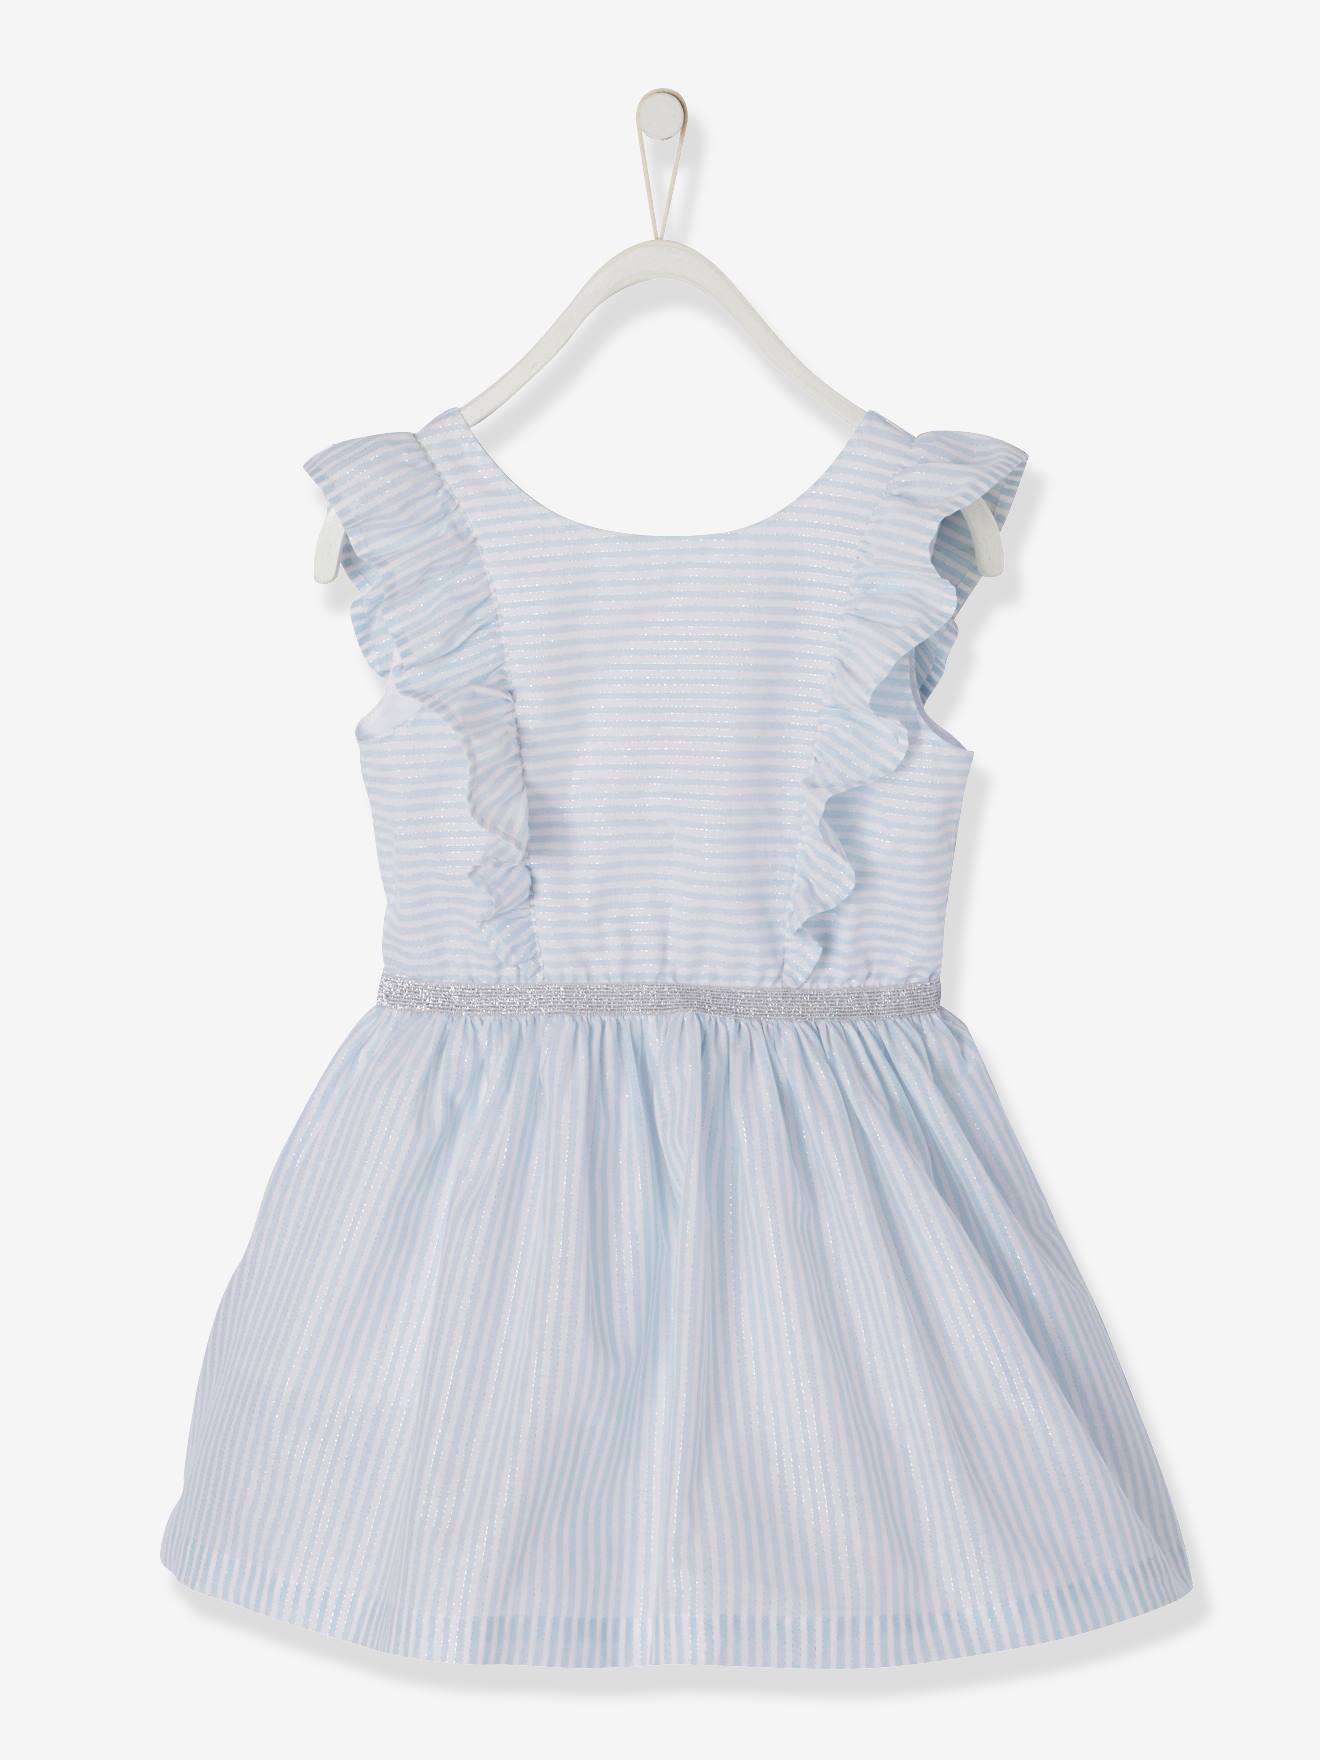 white dress with stripes